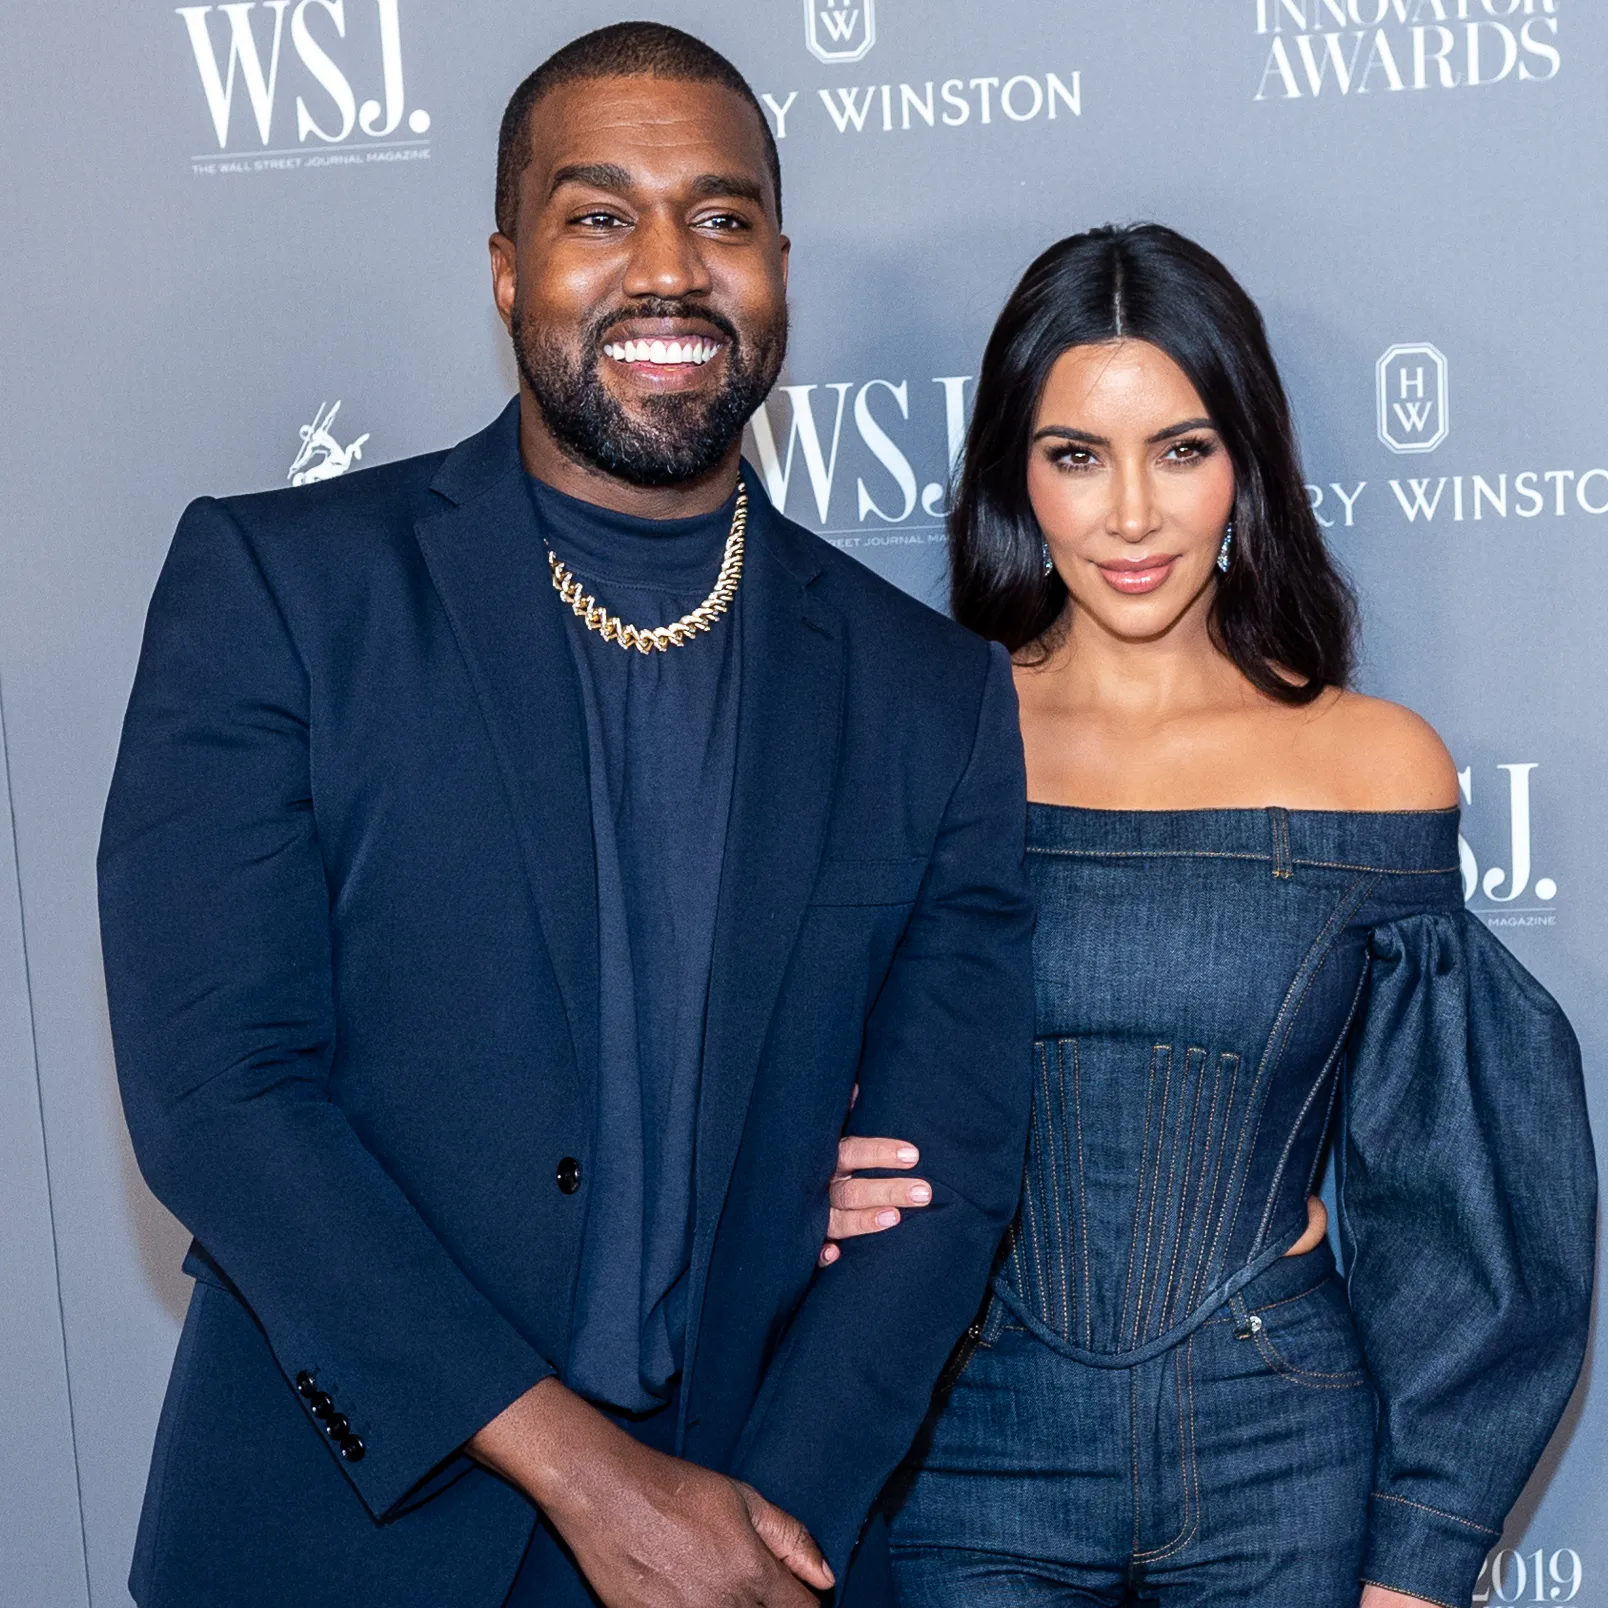 Kim Kardashian and her ex-husband, Kanye West